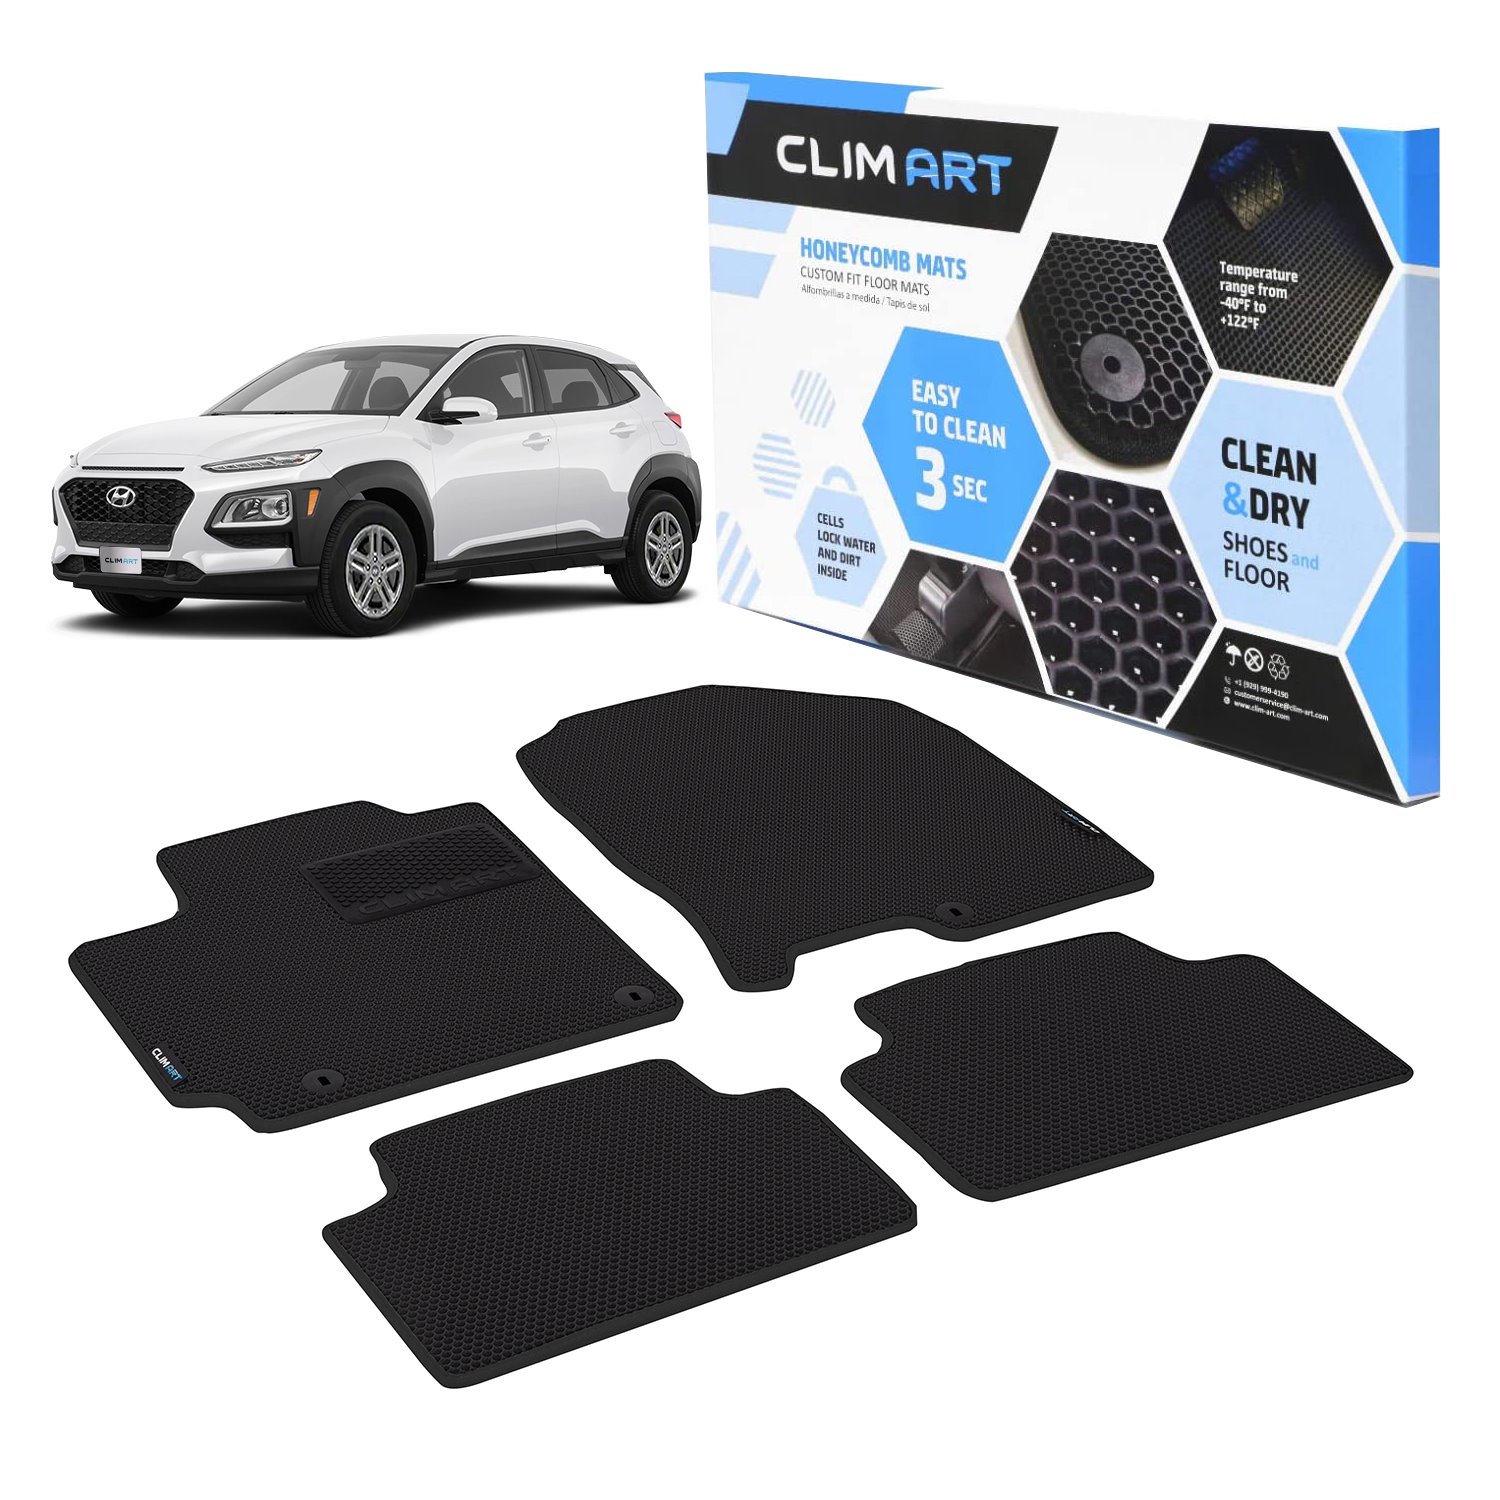 CLIM ART Honeycomb Custom Fit Floor Mats Fits Select Hyundai Kona